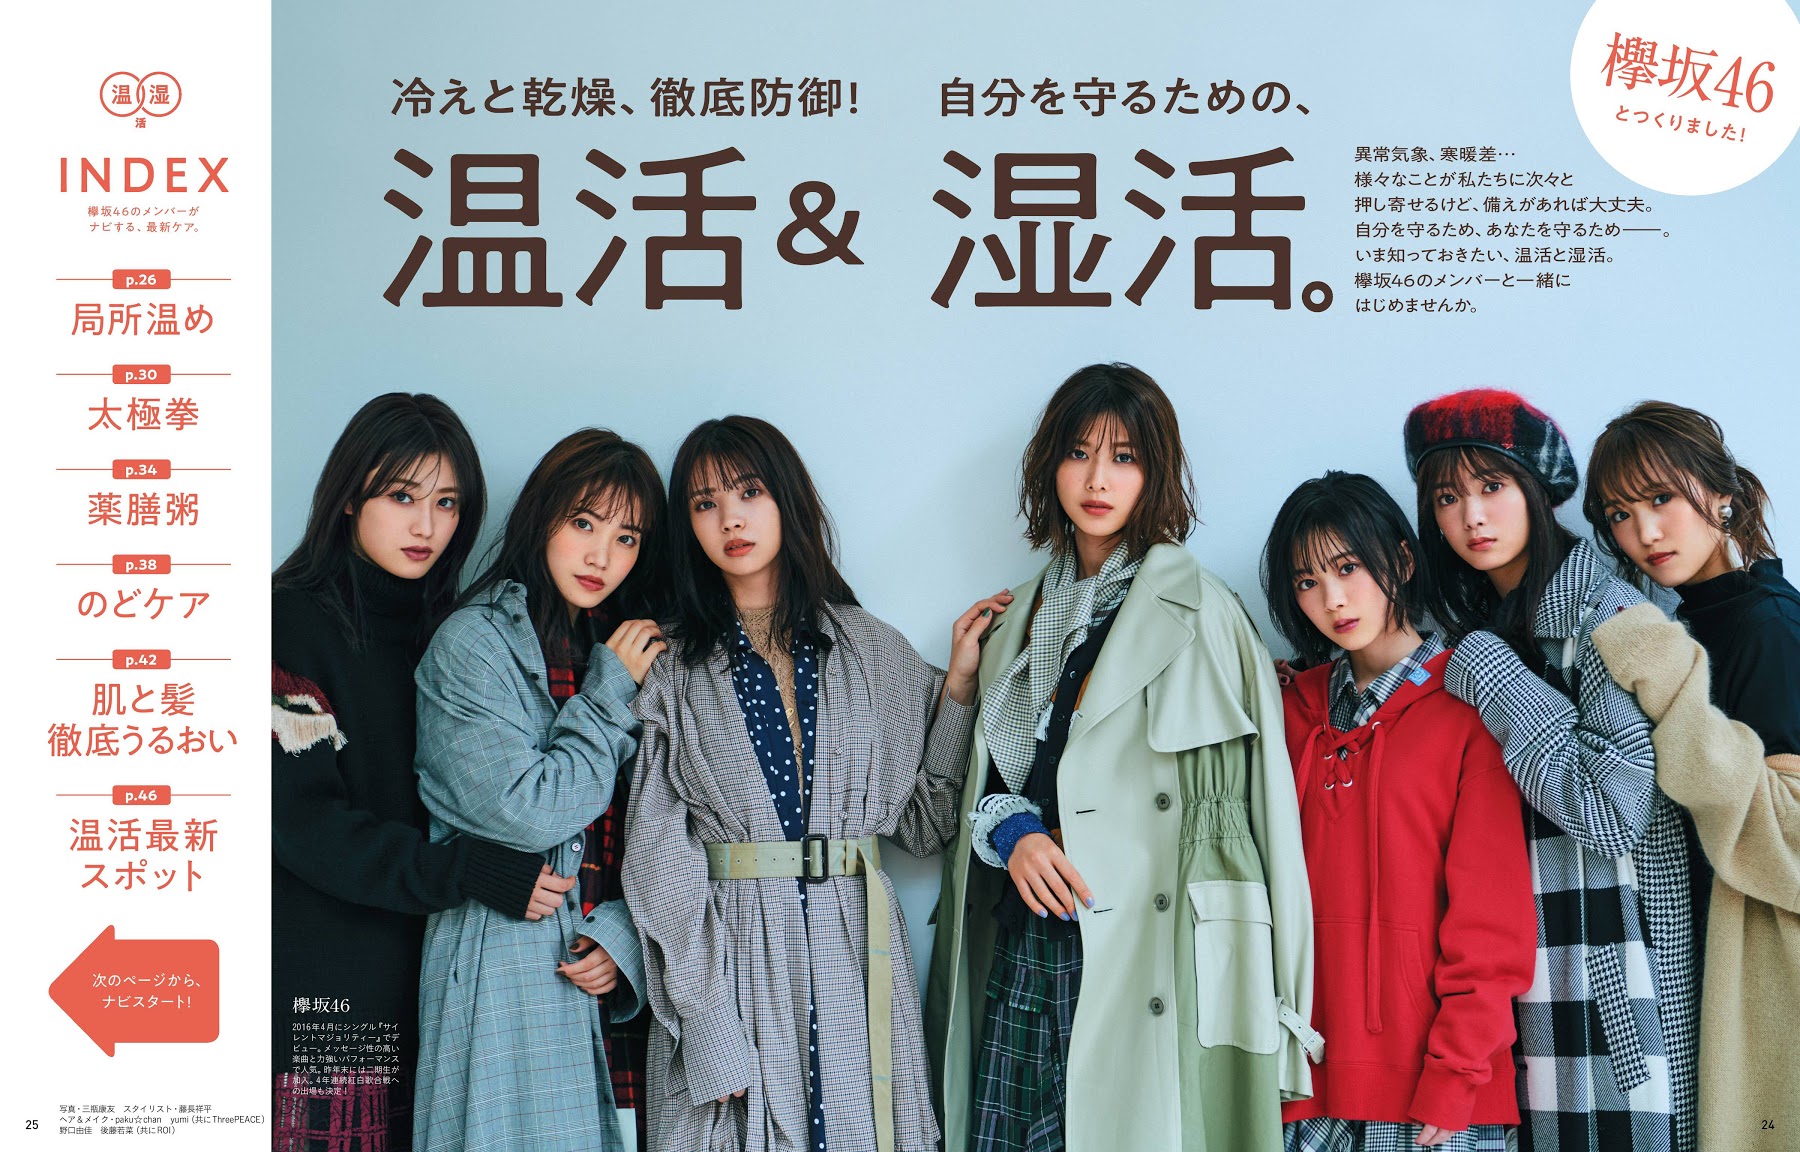 anan 2019.12.11 No.2179 Sakurazaka46 - Introducing the cover of everyone